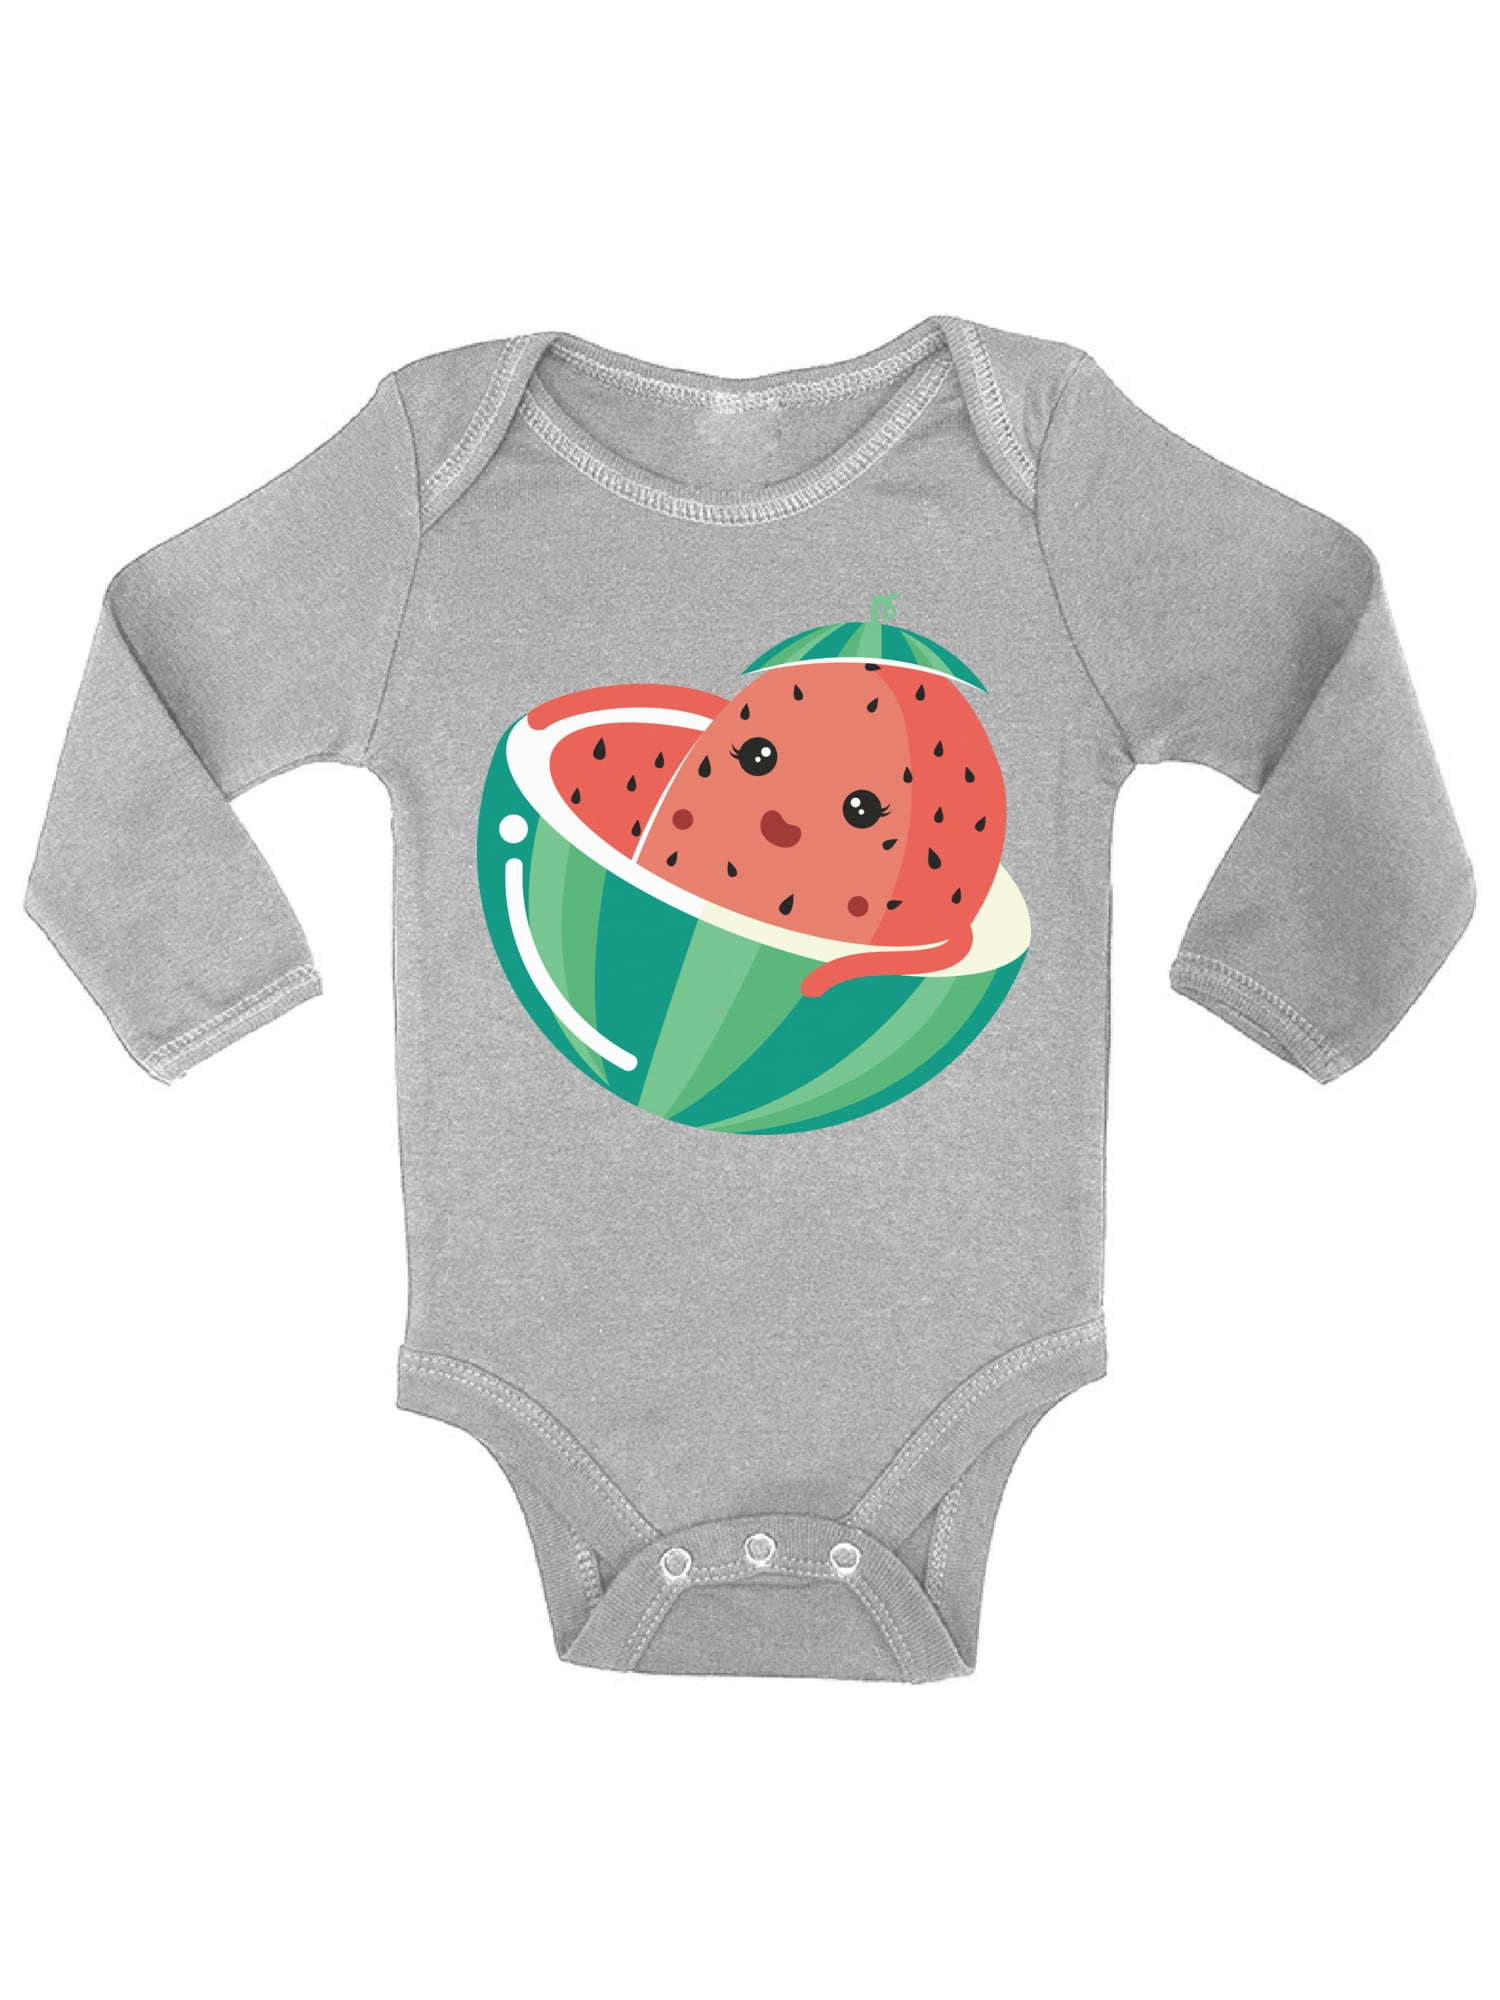 newborn watermelon outfit